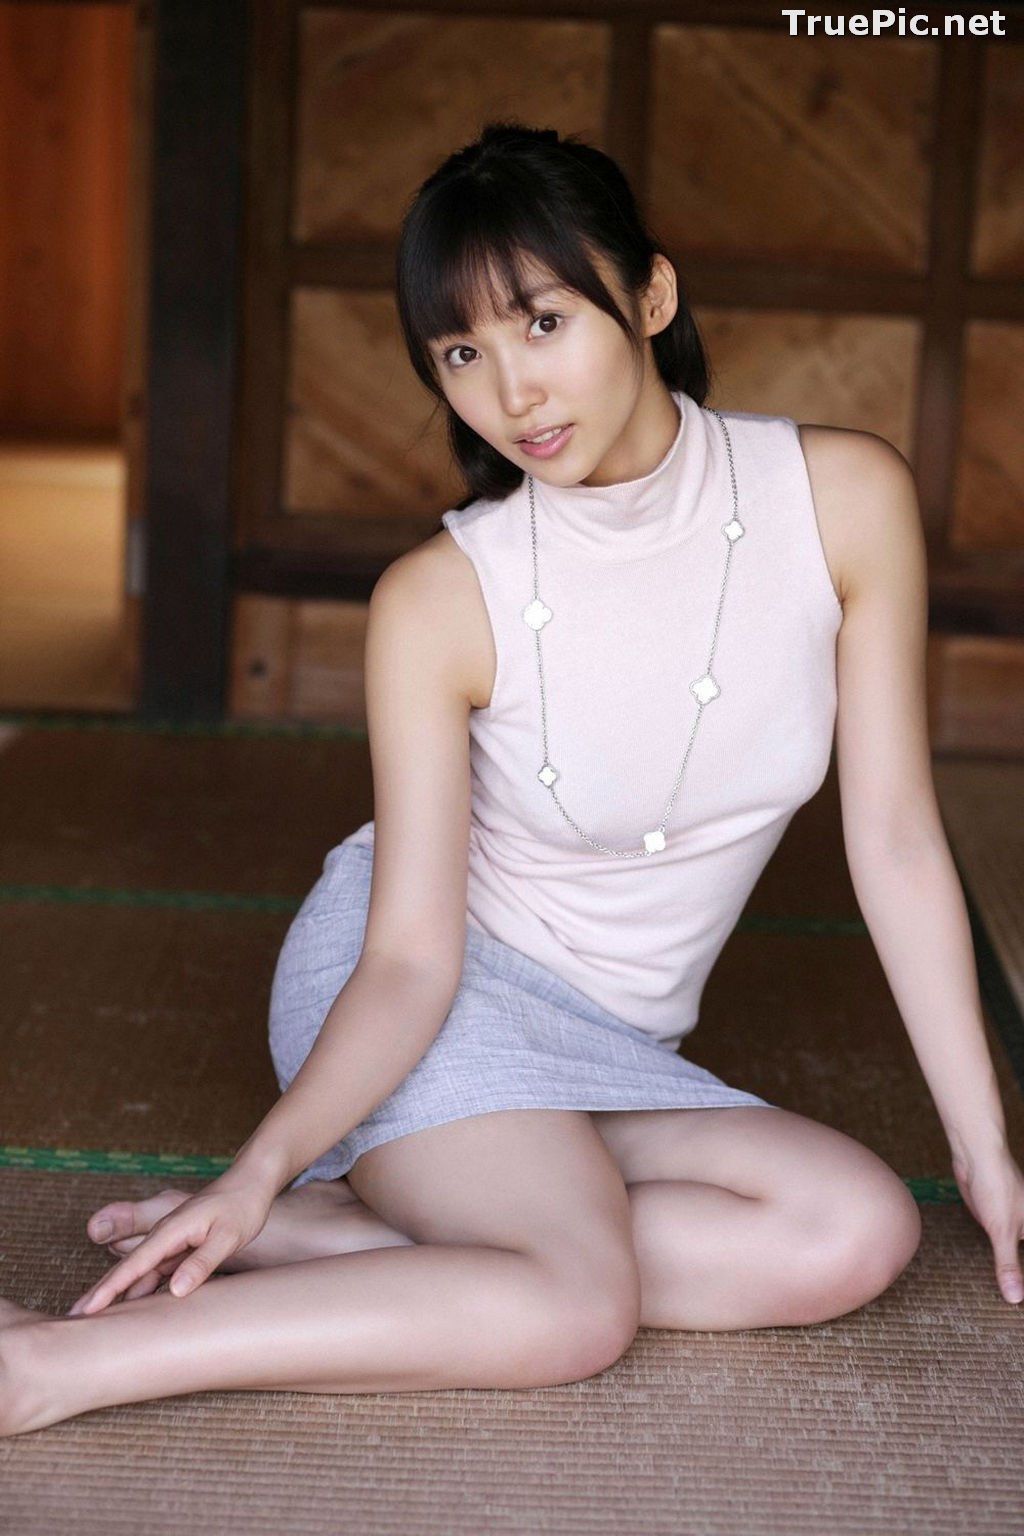 Image [YS Web] Vol.527 - Japanese Gravure Idol and Singer - Risa Yoshiki - TruePic.net - Picture-27